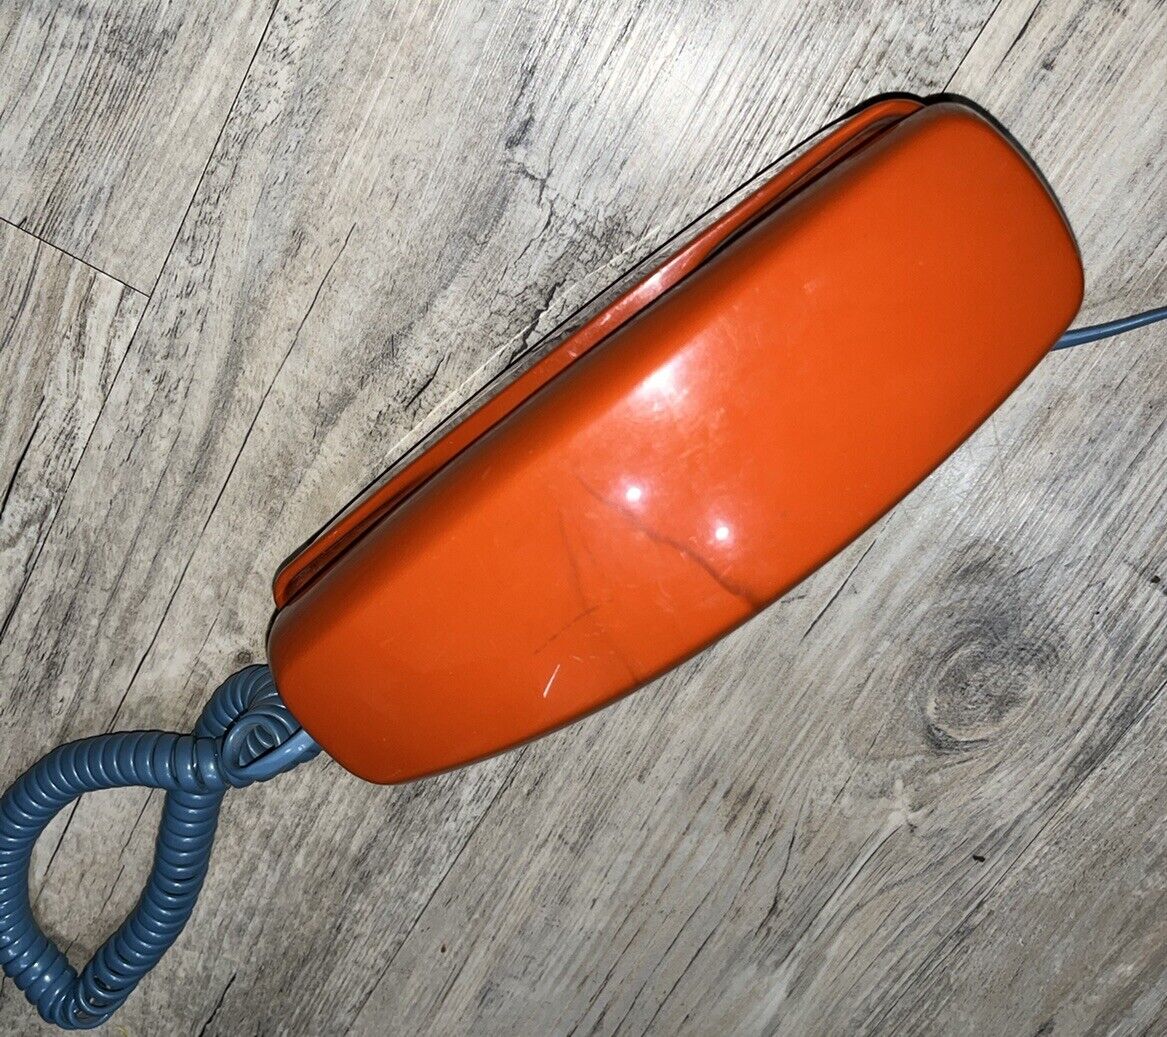 ORANGE  -  vintage  TRIMLINE  ROTARY DIAL TELEPHONE  -  very cool MCM